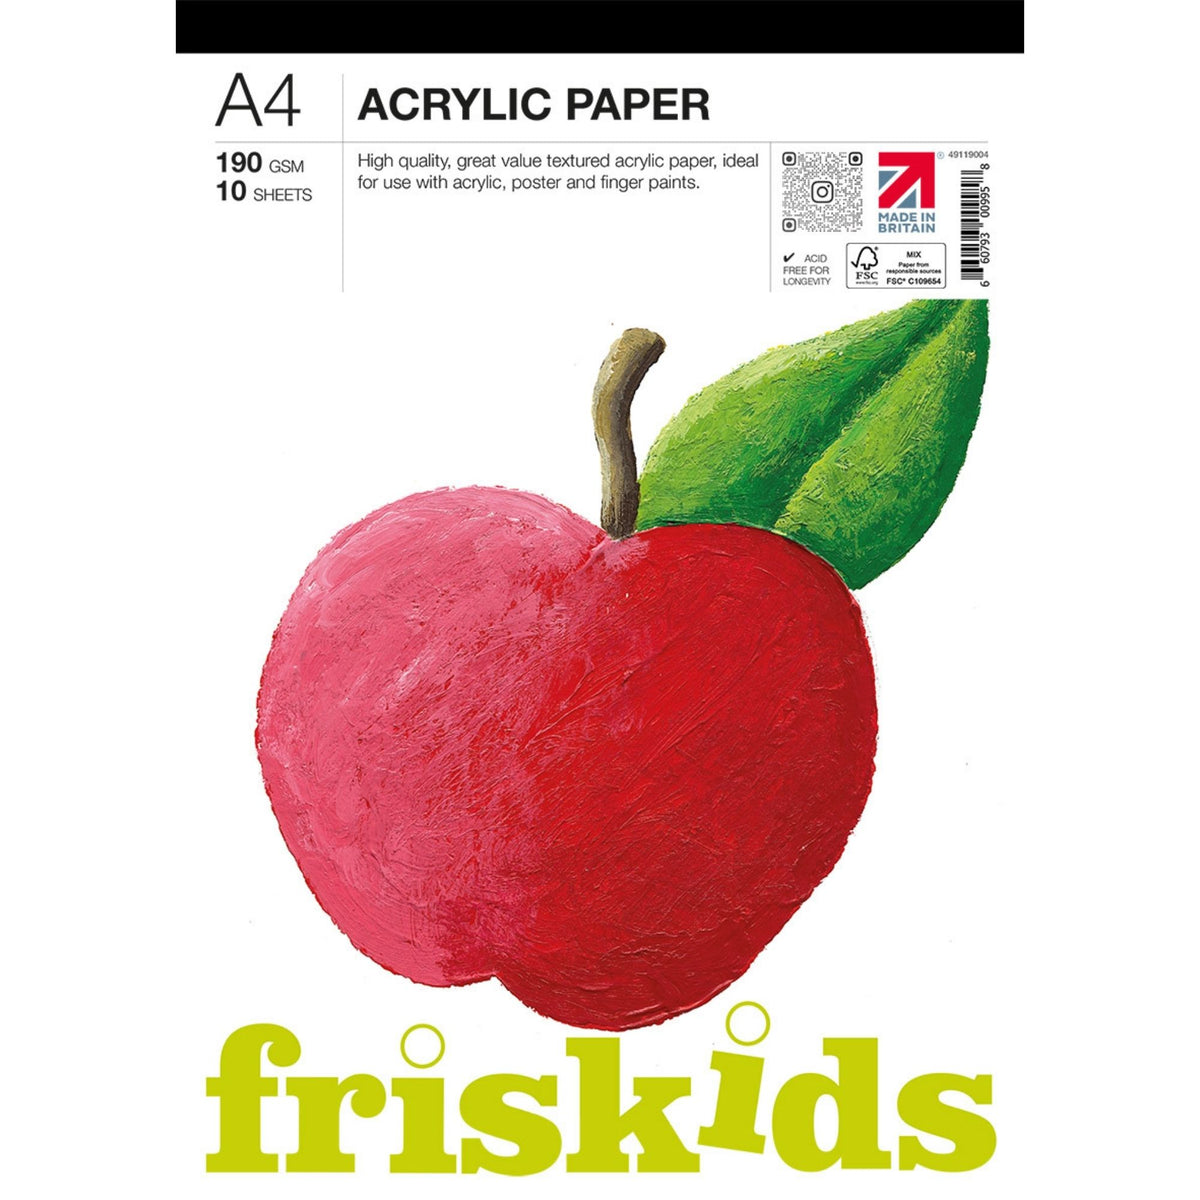 Friskids Acrylic Pad - A4